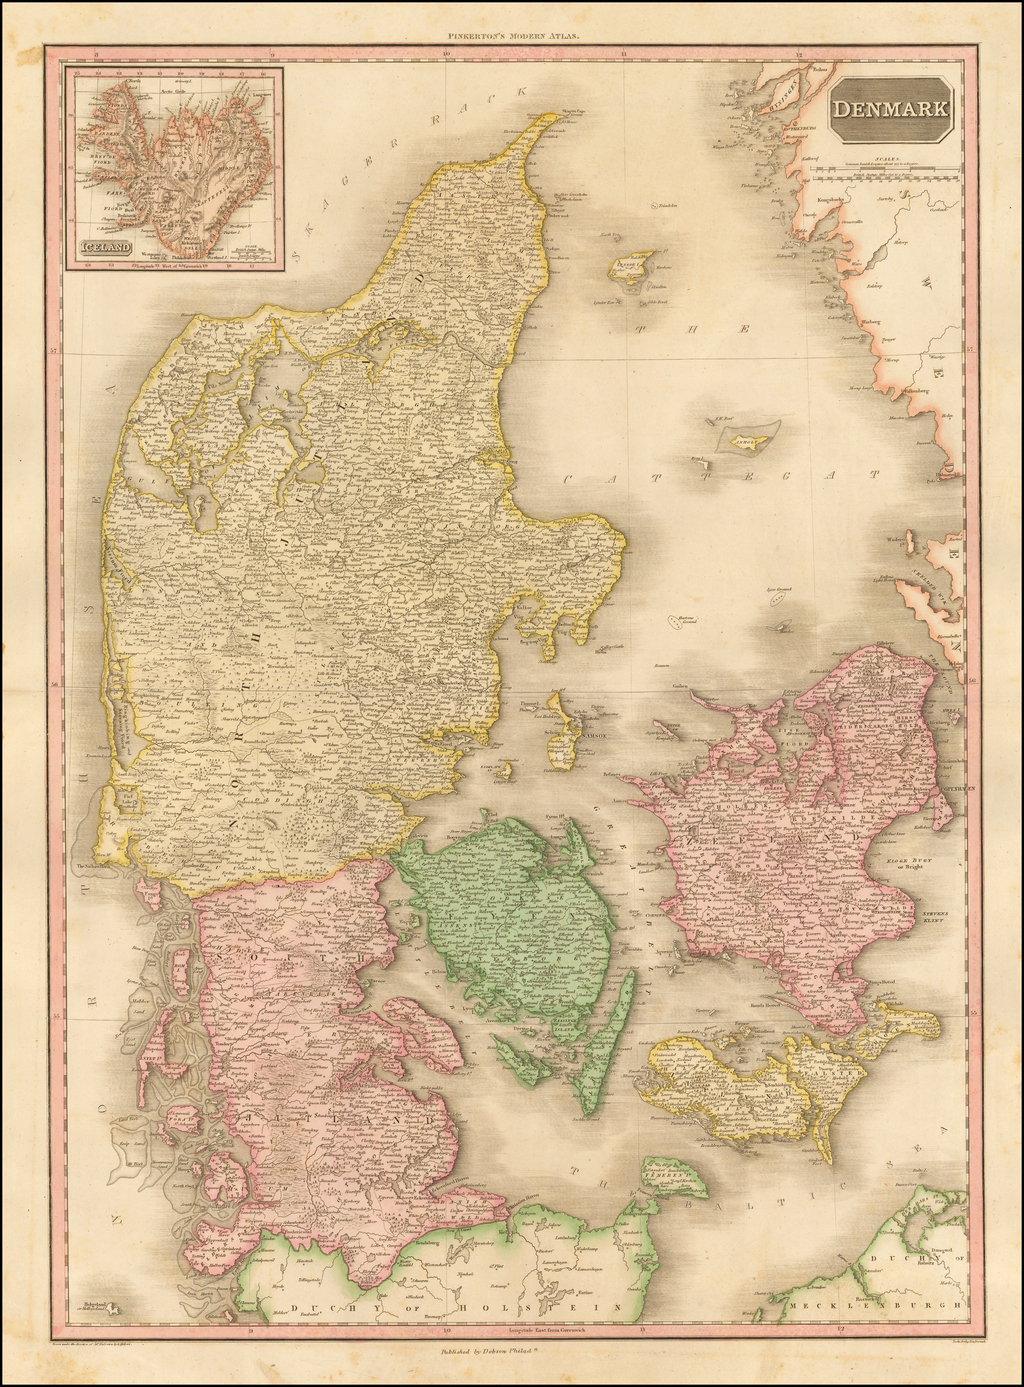 Denmark Barry Lawrence Ruderman Antique Maps Inc 7612